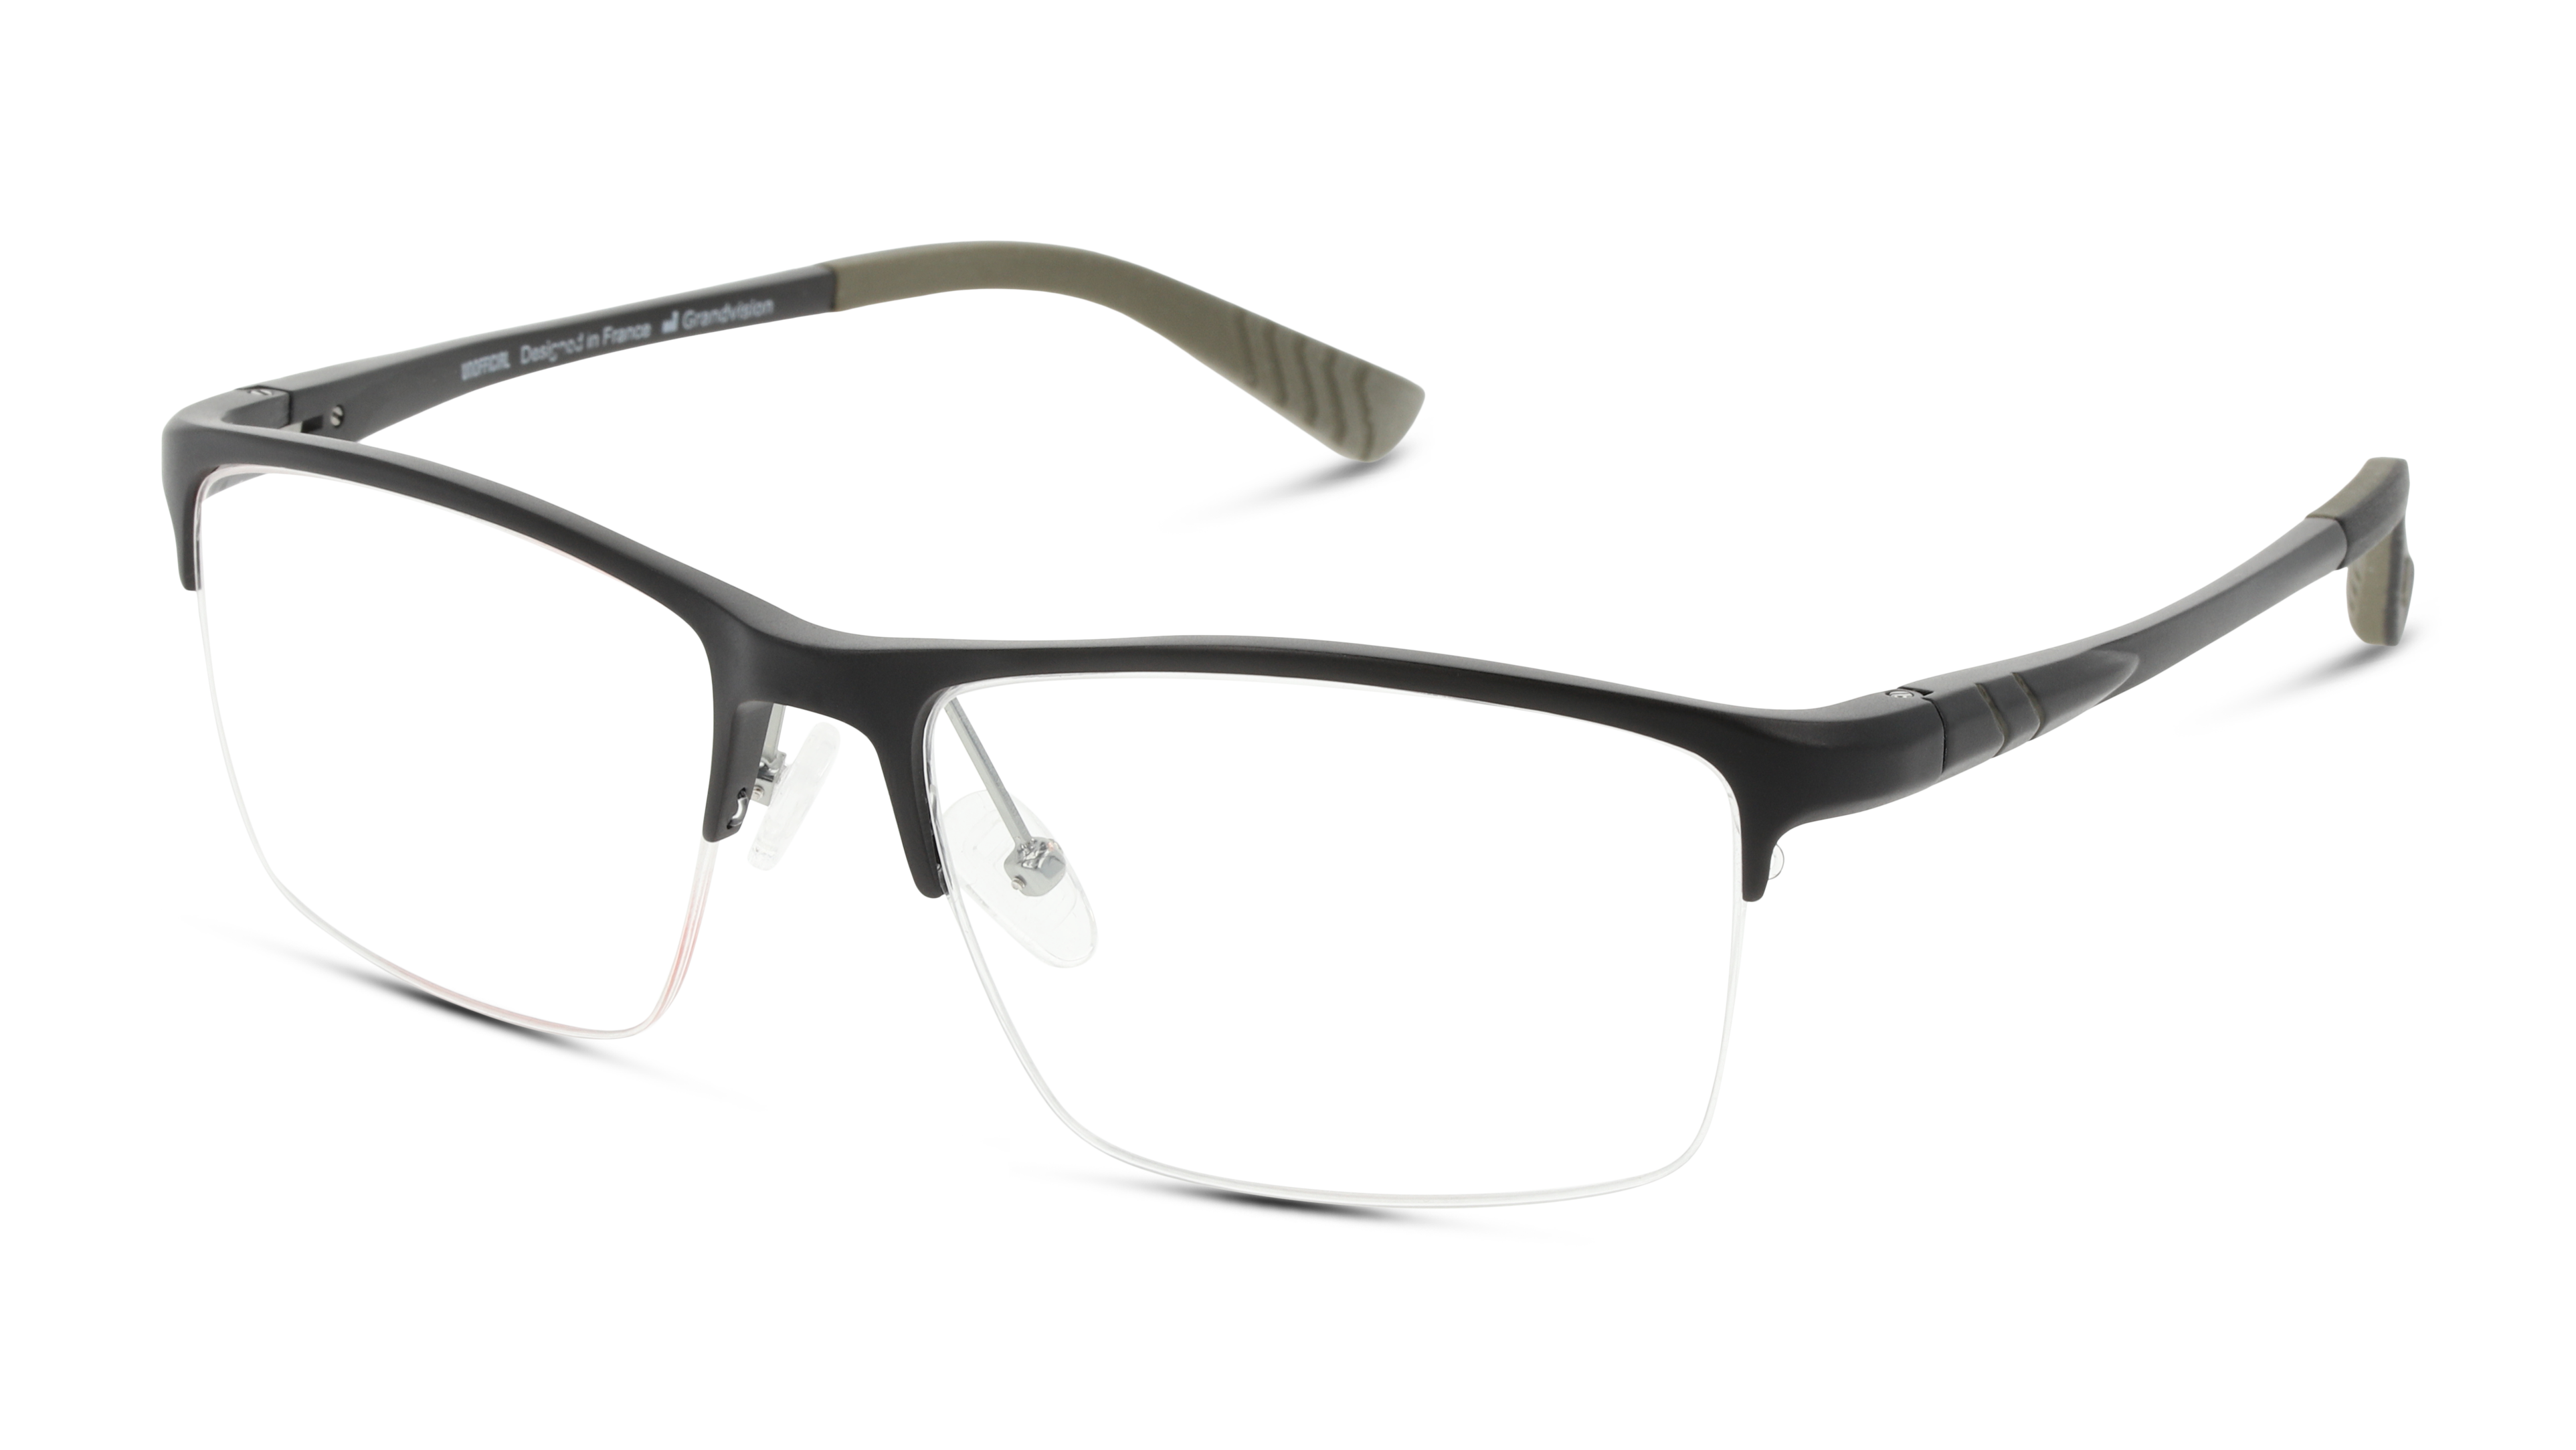 Angle_Left01 Unofficial UNOM0325 (BB00) Glasses Transparent / Black